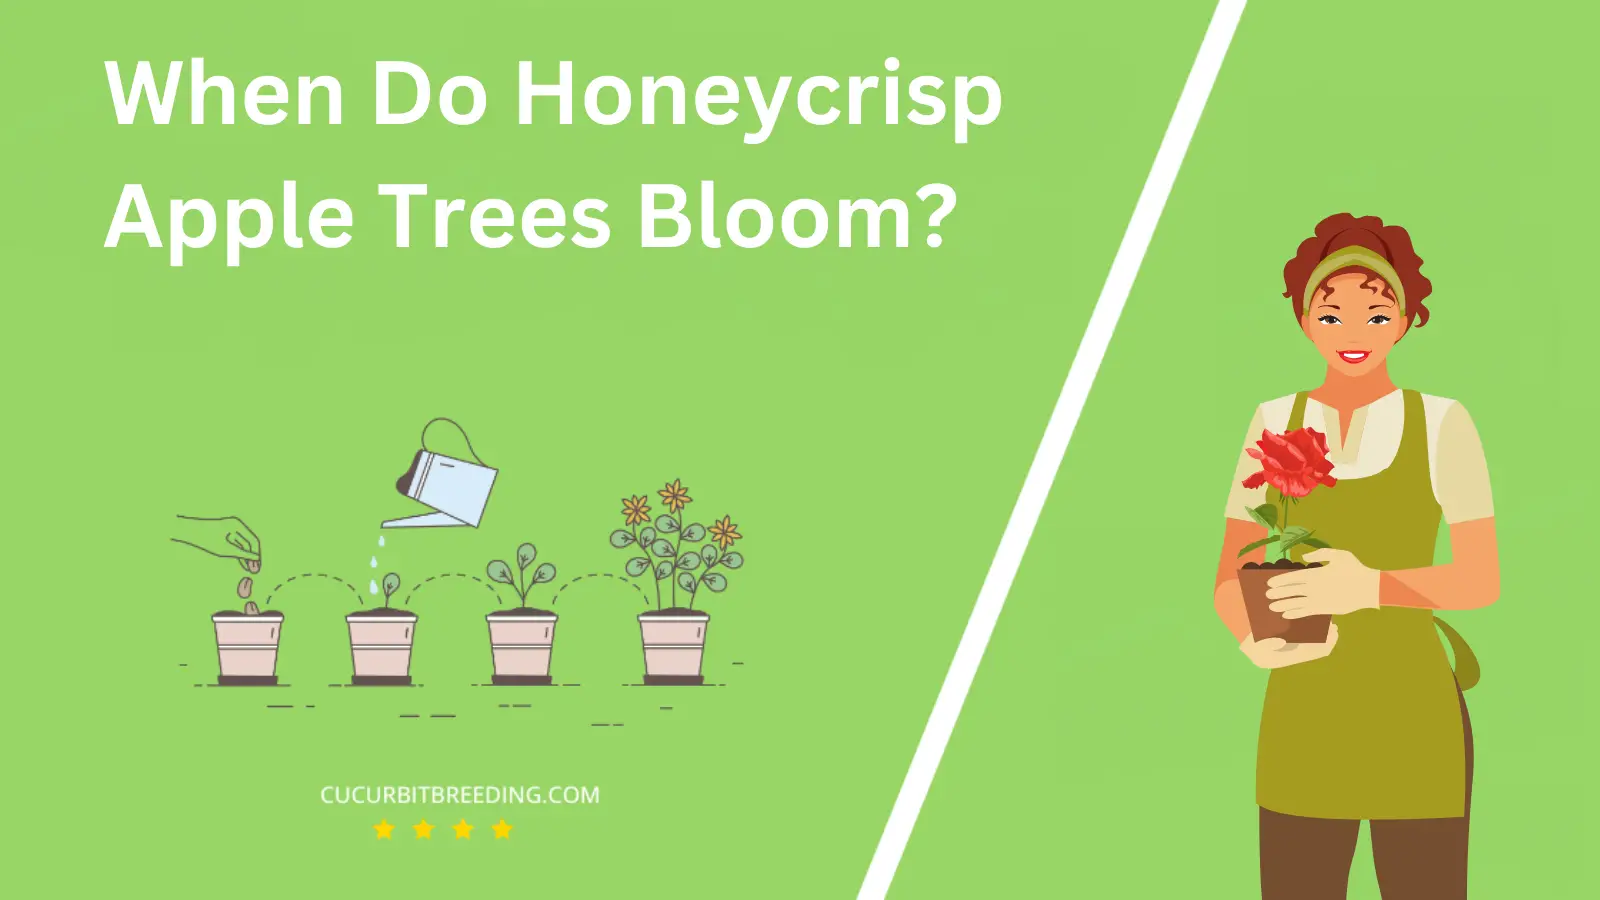 When Do Honeycrisp Apple Trees Bloom?